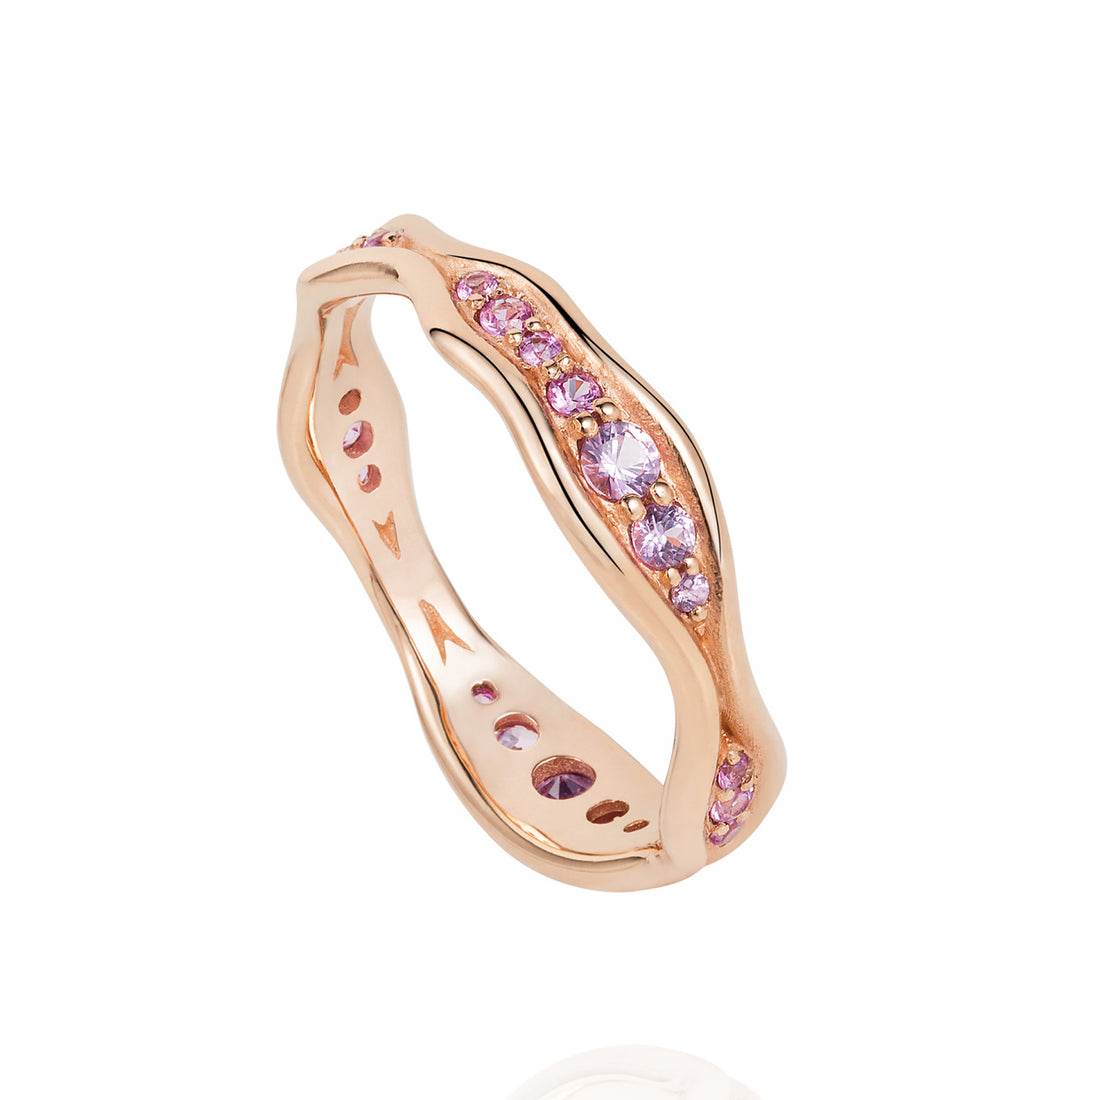  Fluid Pink Sapphire Ring by Fernando Jorge | The Cut London